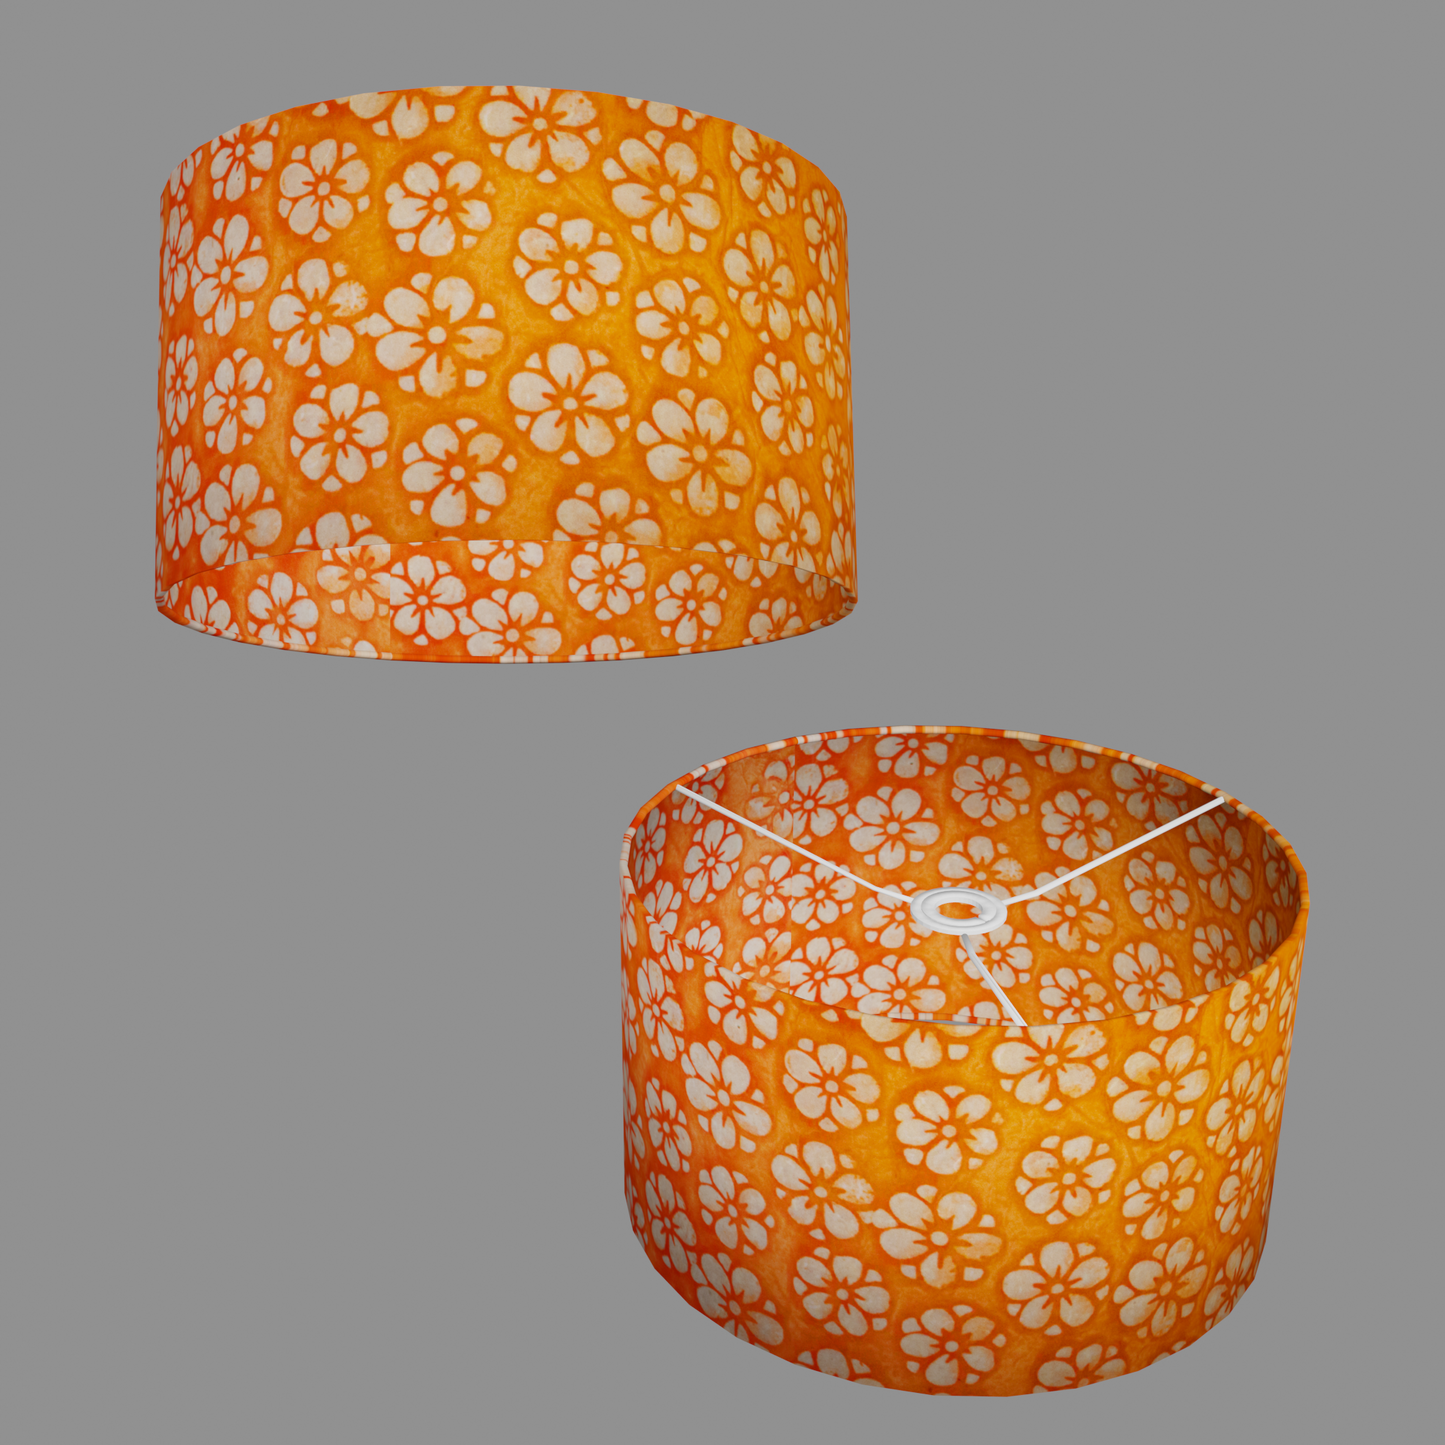 Drum Lamp Shade - P94 - Batik Star Flower on Orange, 35cm(d) x 20cm(h)